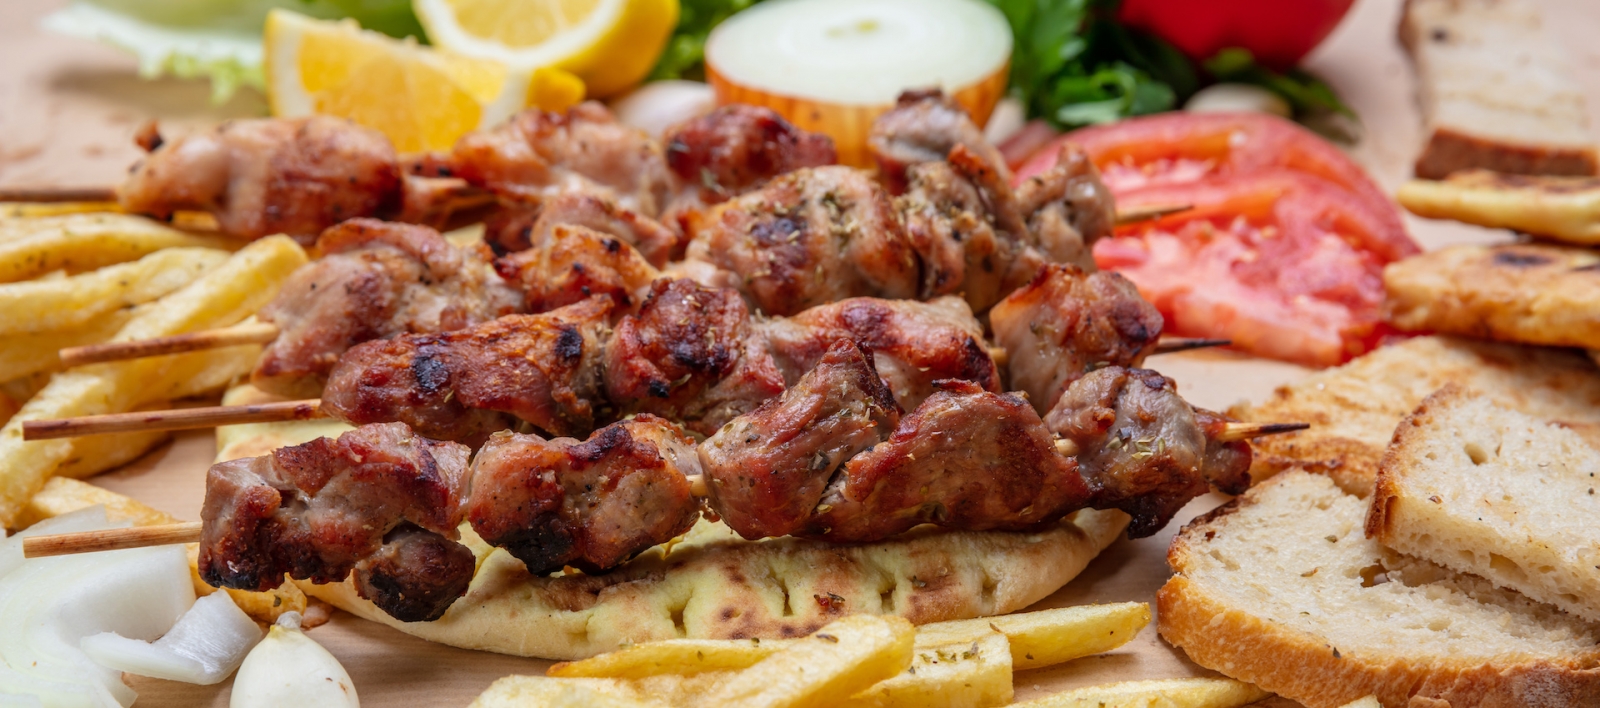 Souvlaki, meat skewers, traditional greek turkish meat food on pita bread and potatoes